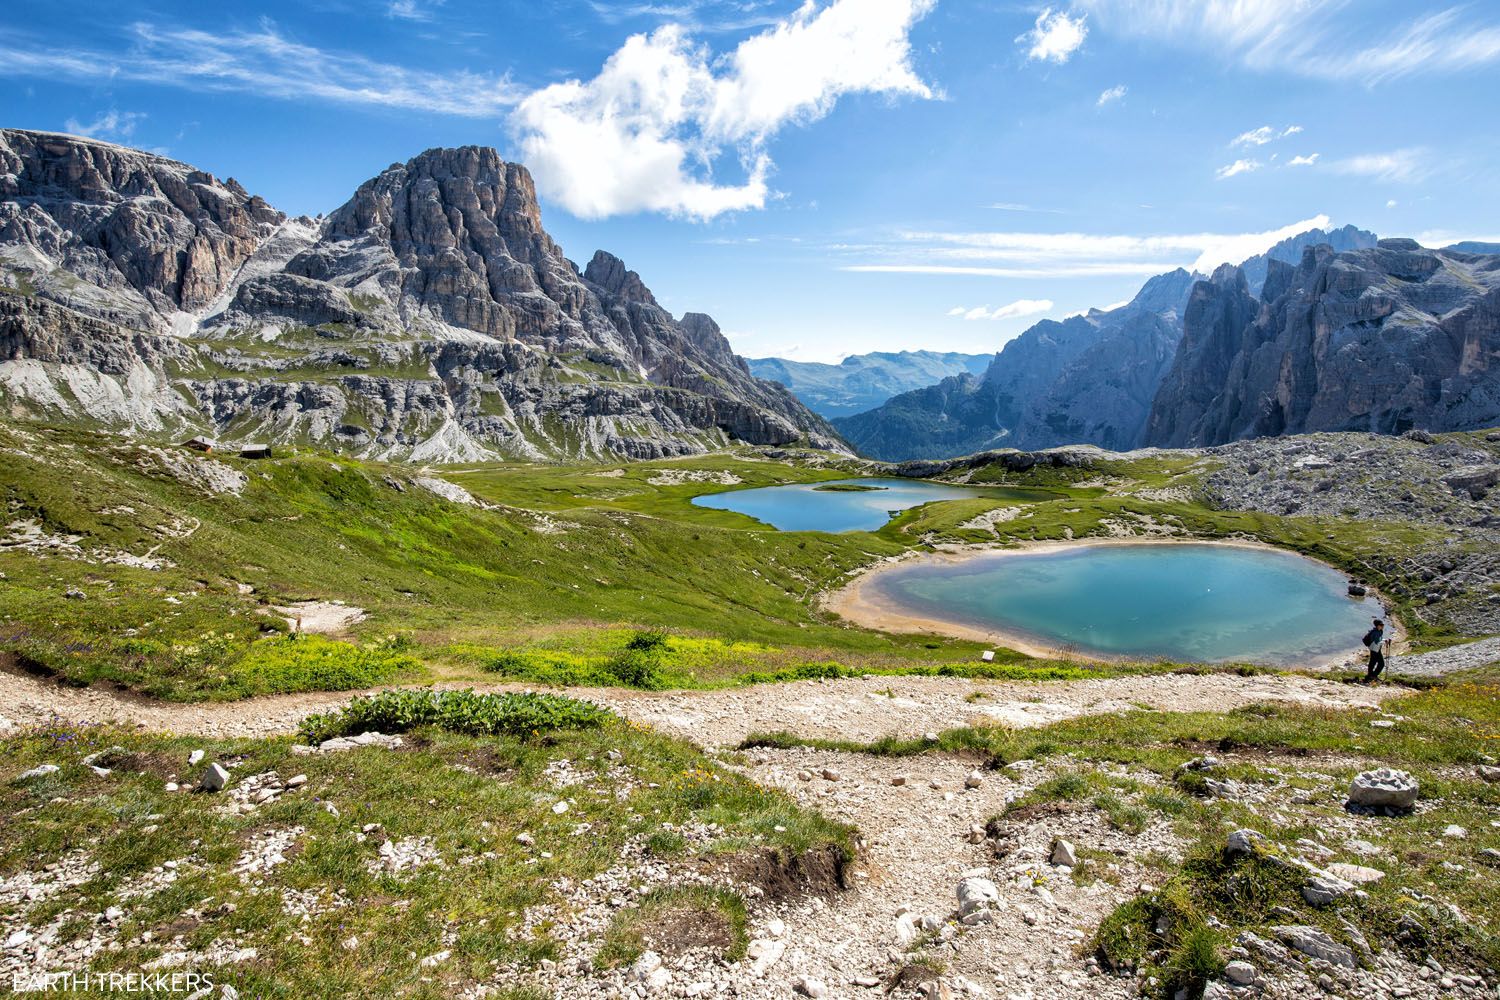 Dolomites Lake | How to plan a trip to the Dolomites